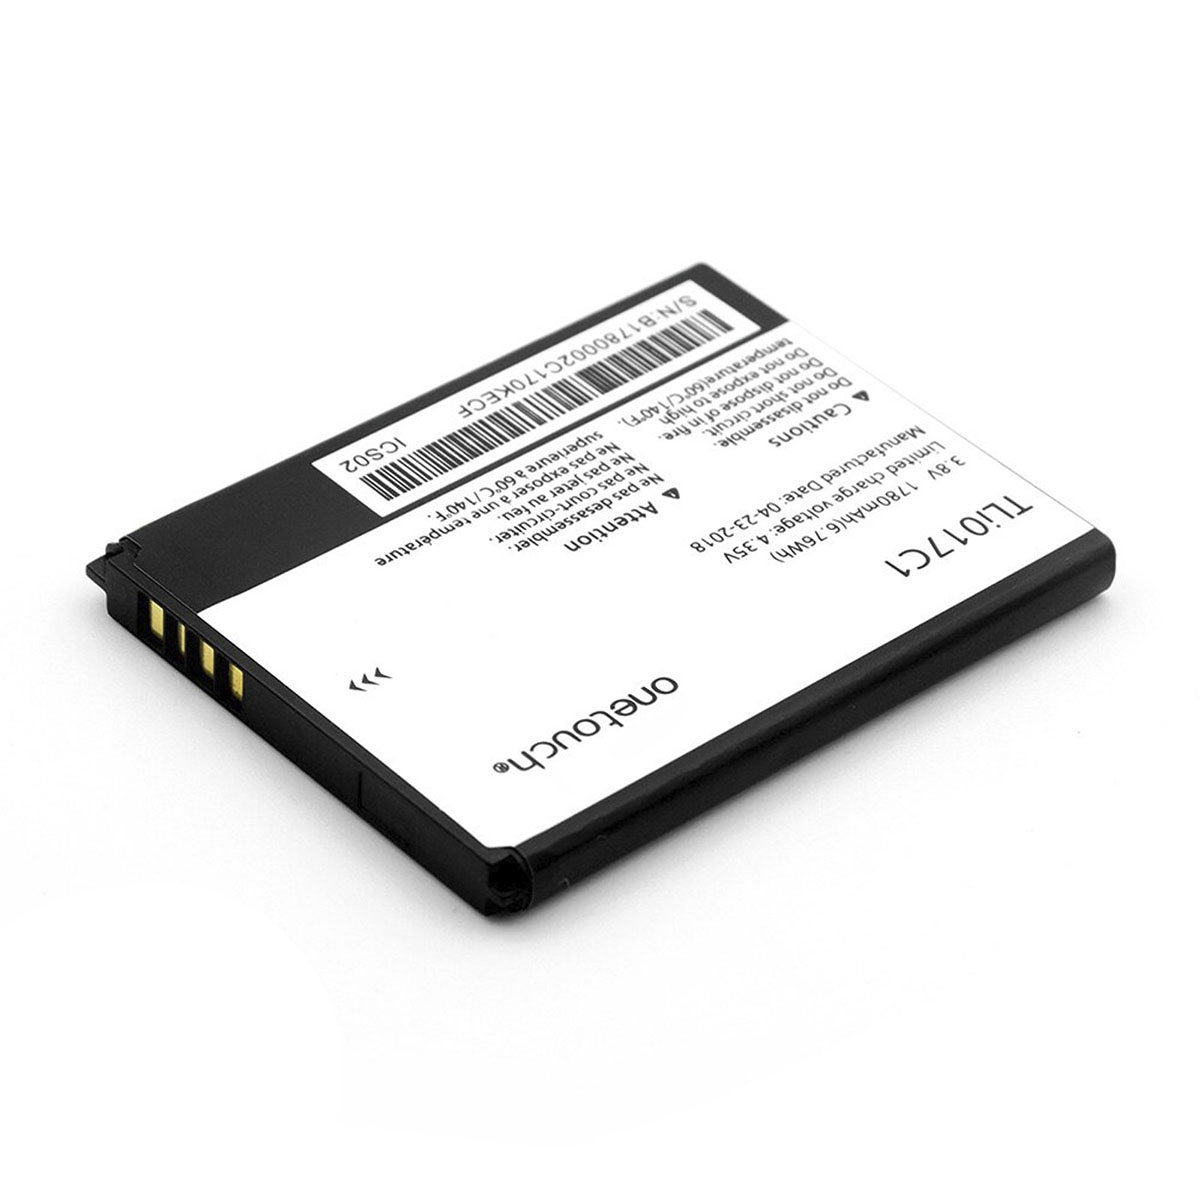 АКБ (Аккумулятор) TLI017C1 для Alcatel One Touch Pixi 3 OT-5017D, 5019D, 1780 mAh, цвет черно белый.